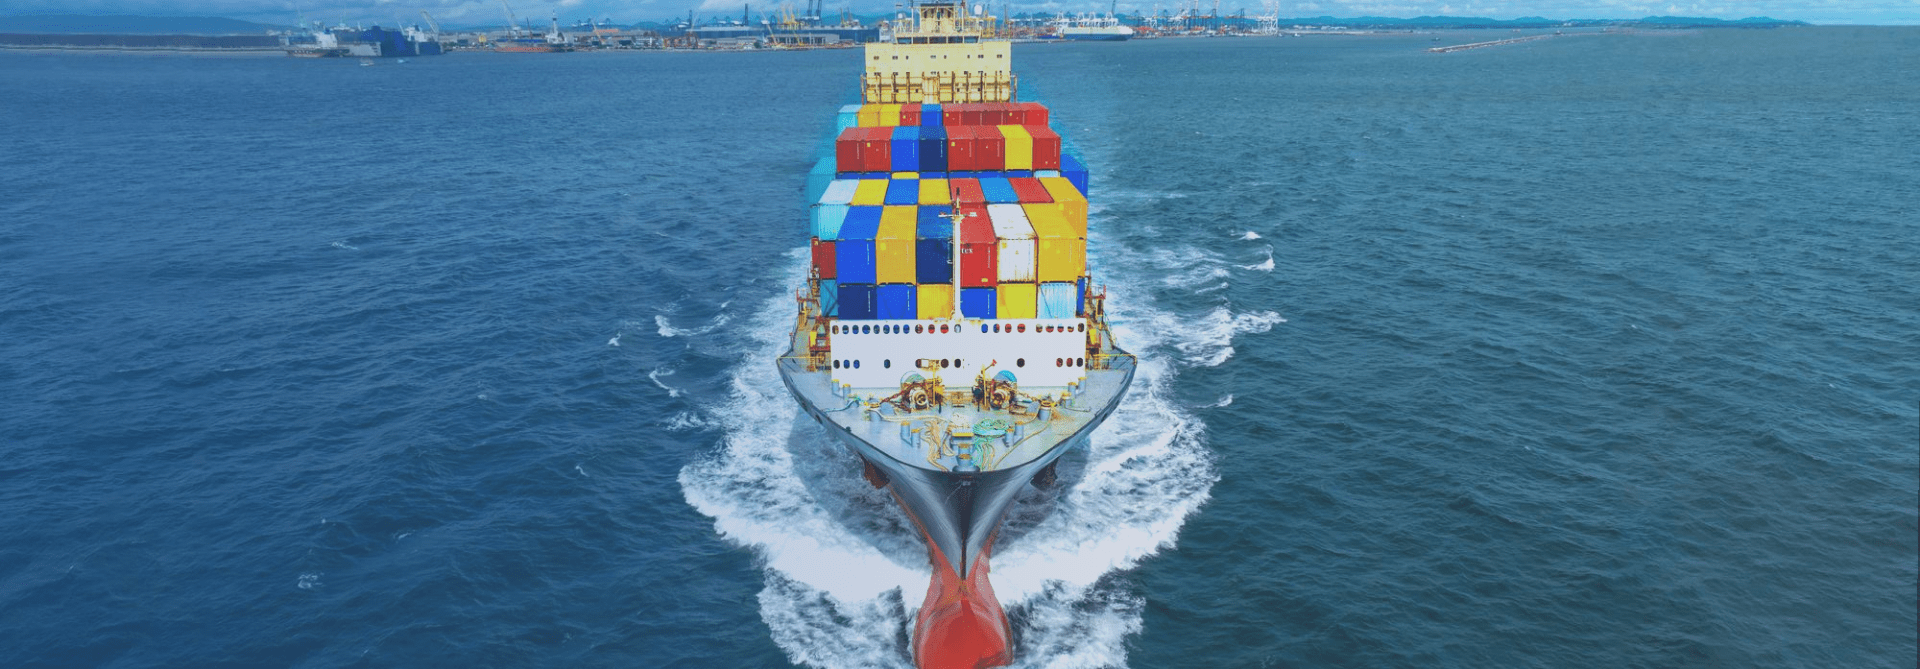 sea-freight-breadcum